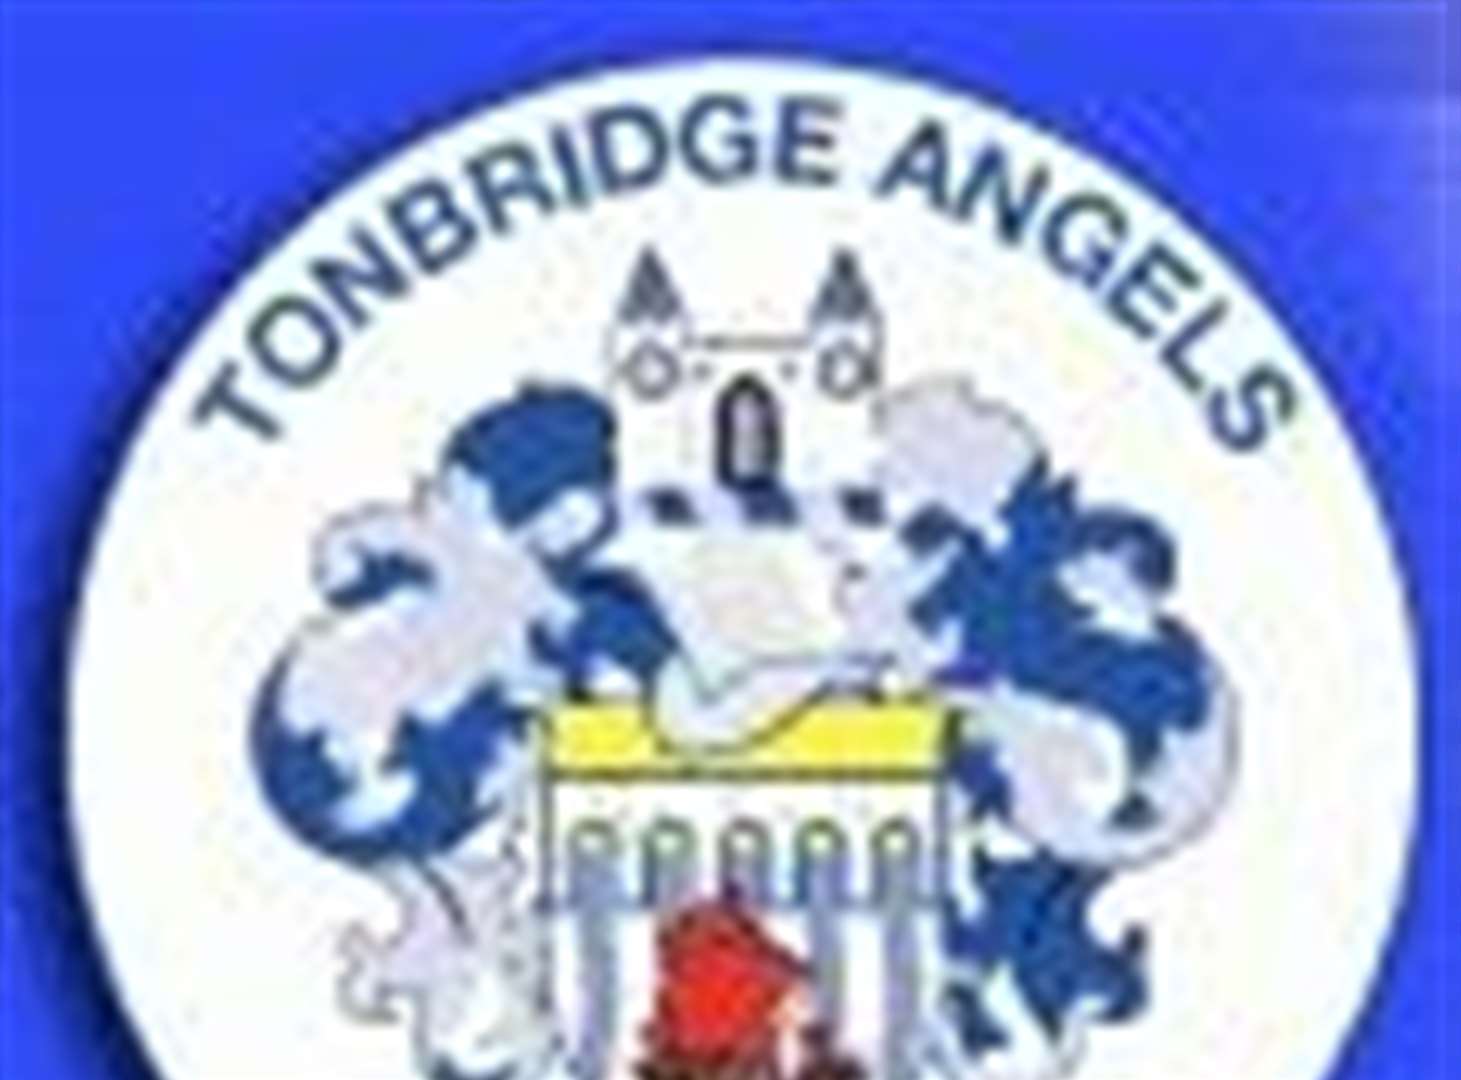 Tonbridge Angels F.C. Wallpapers